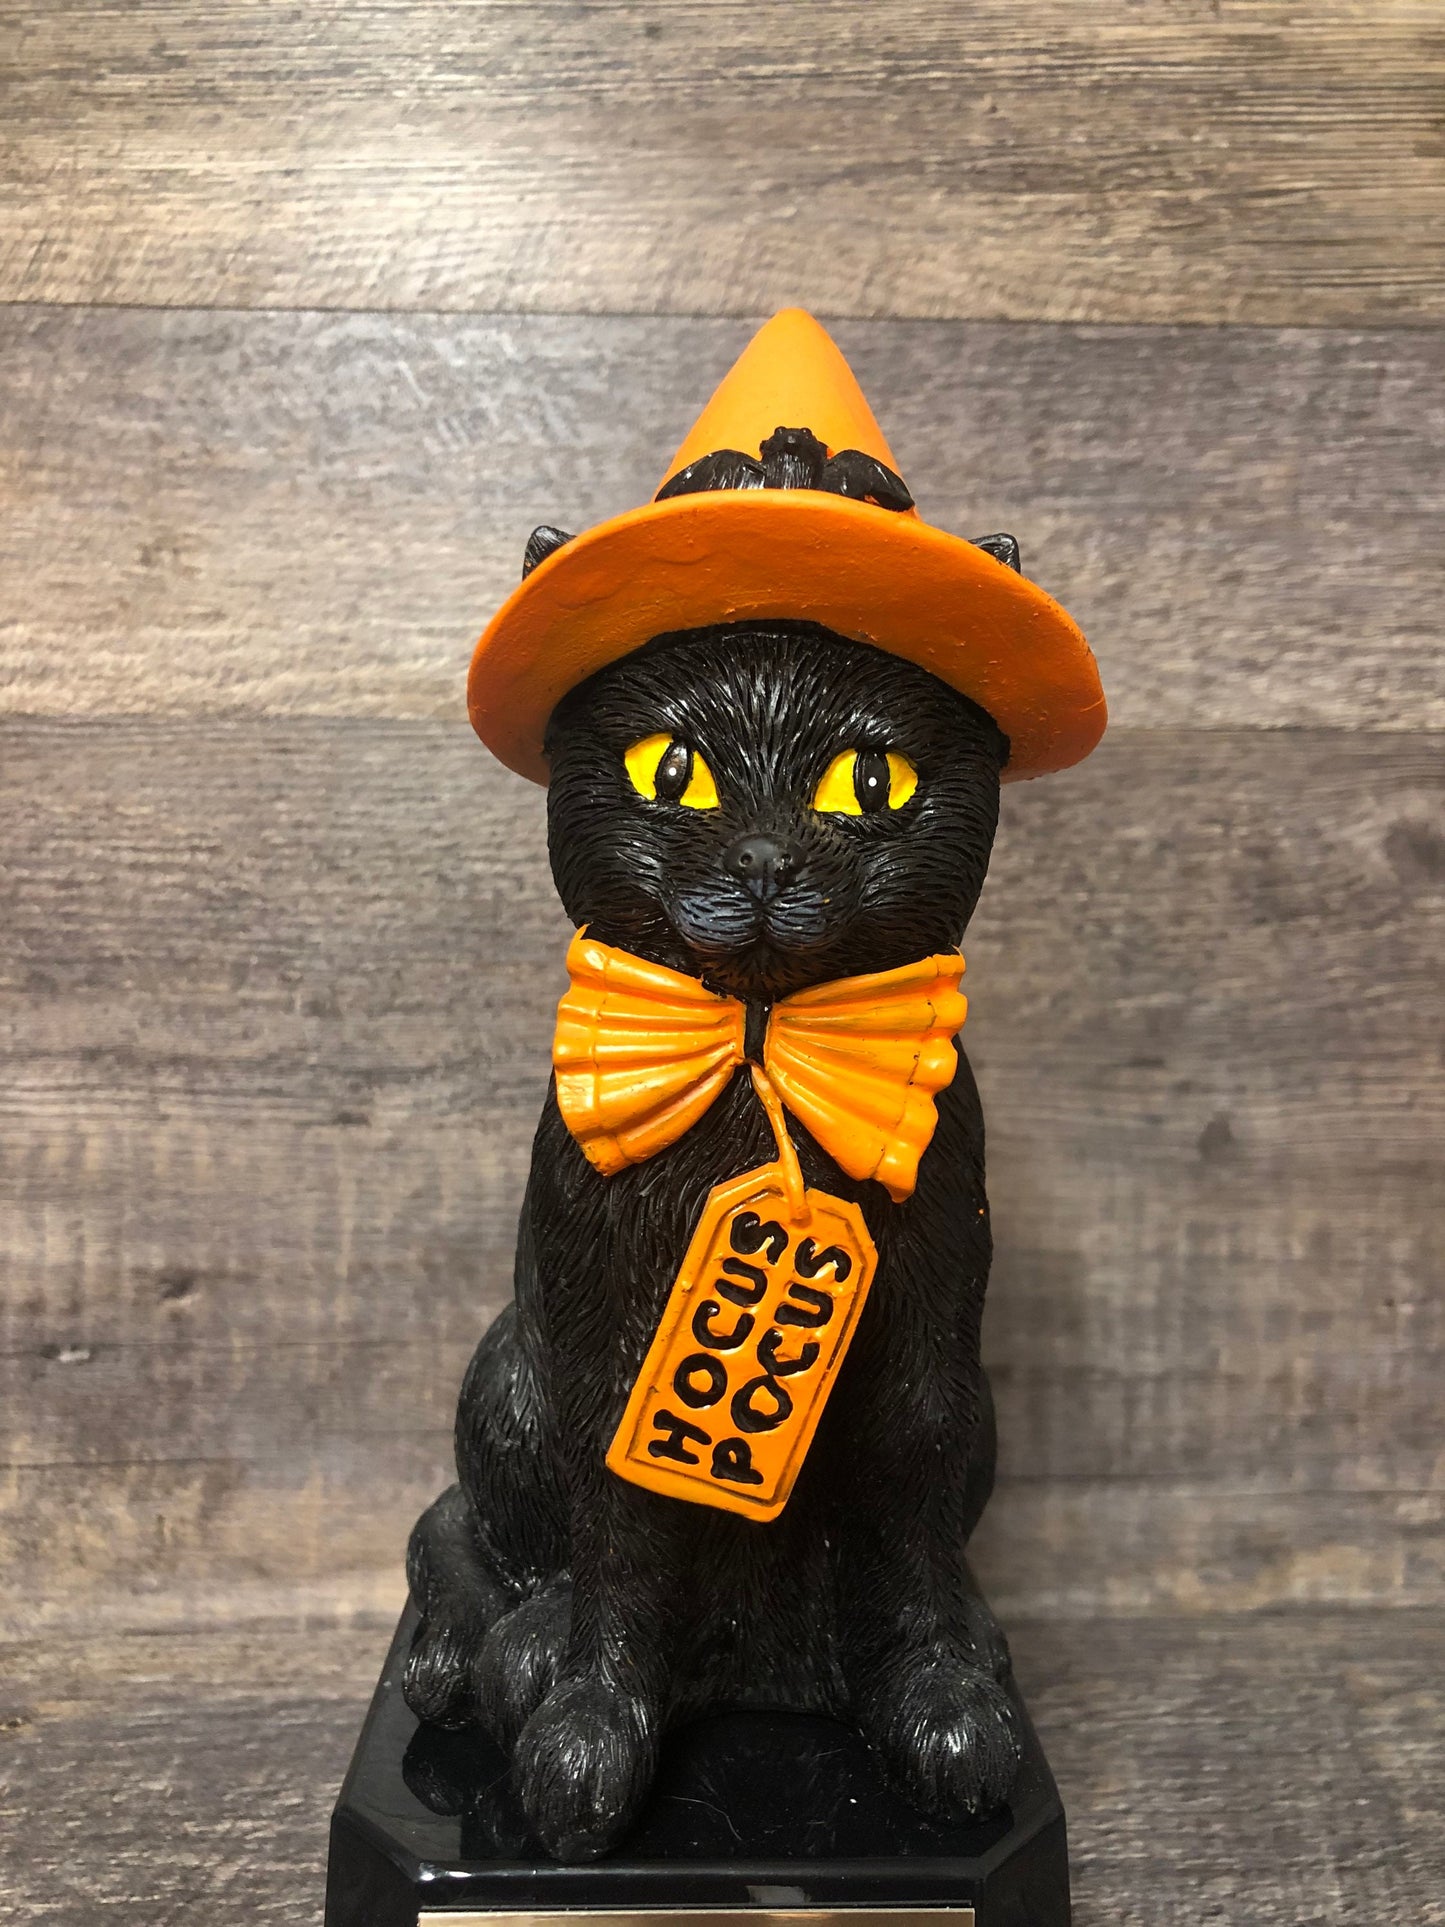 Halloween Trophy Scariest Costume Contest Pumpkin Carving Best Costume Black Cat Day of the Dead Dia De Los Muertos Trunk Or Treat